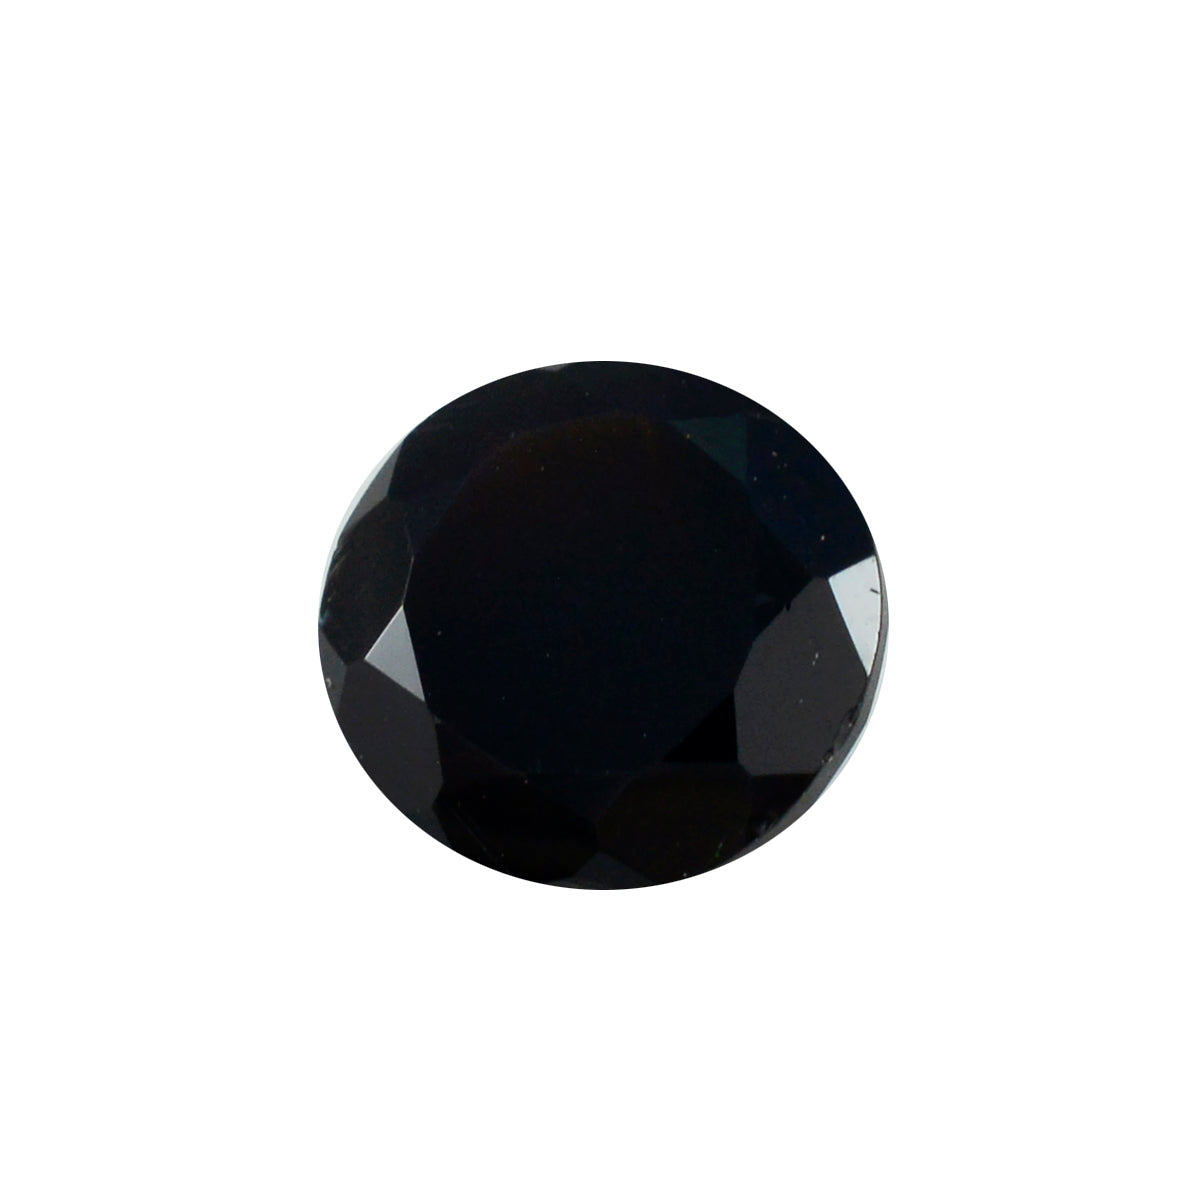 Riyogems 1PC Real Black Onyx Faceted 14x14 mm Round Shape handsome Quality Gems